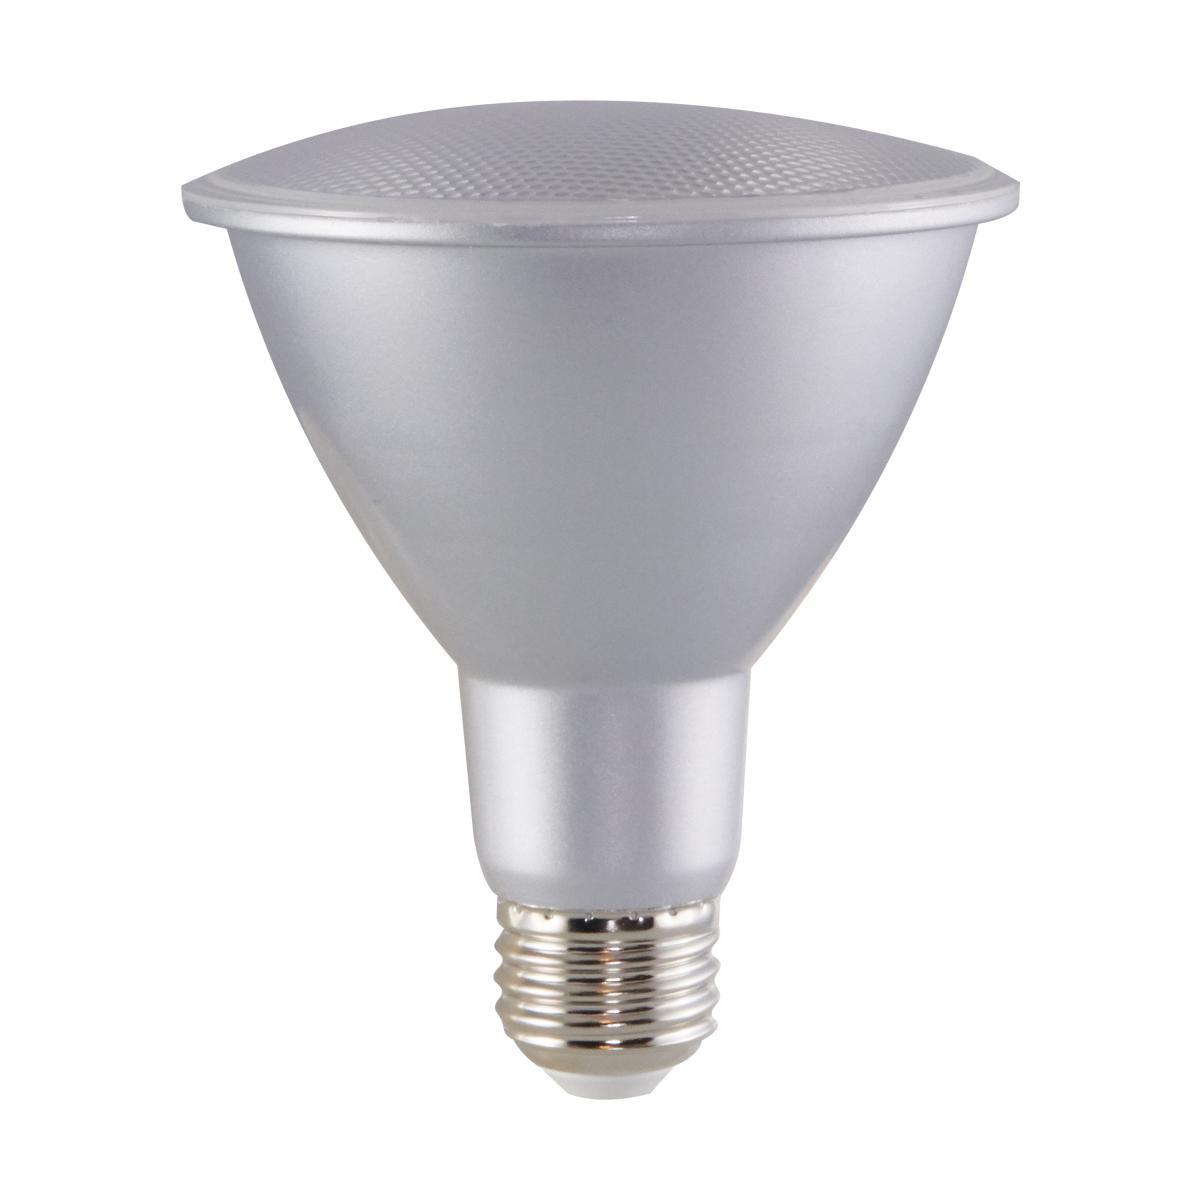 PAR30 Long Neck Reflector LED Bulb, 12 watt, 1000 Lumens, 4000K, E26 Medium Base, 25 Deg. Flood